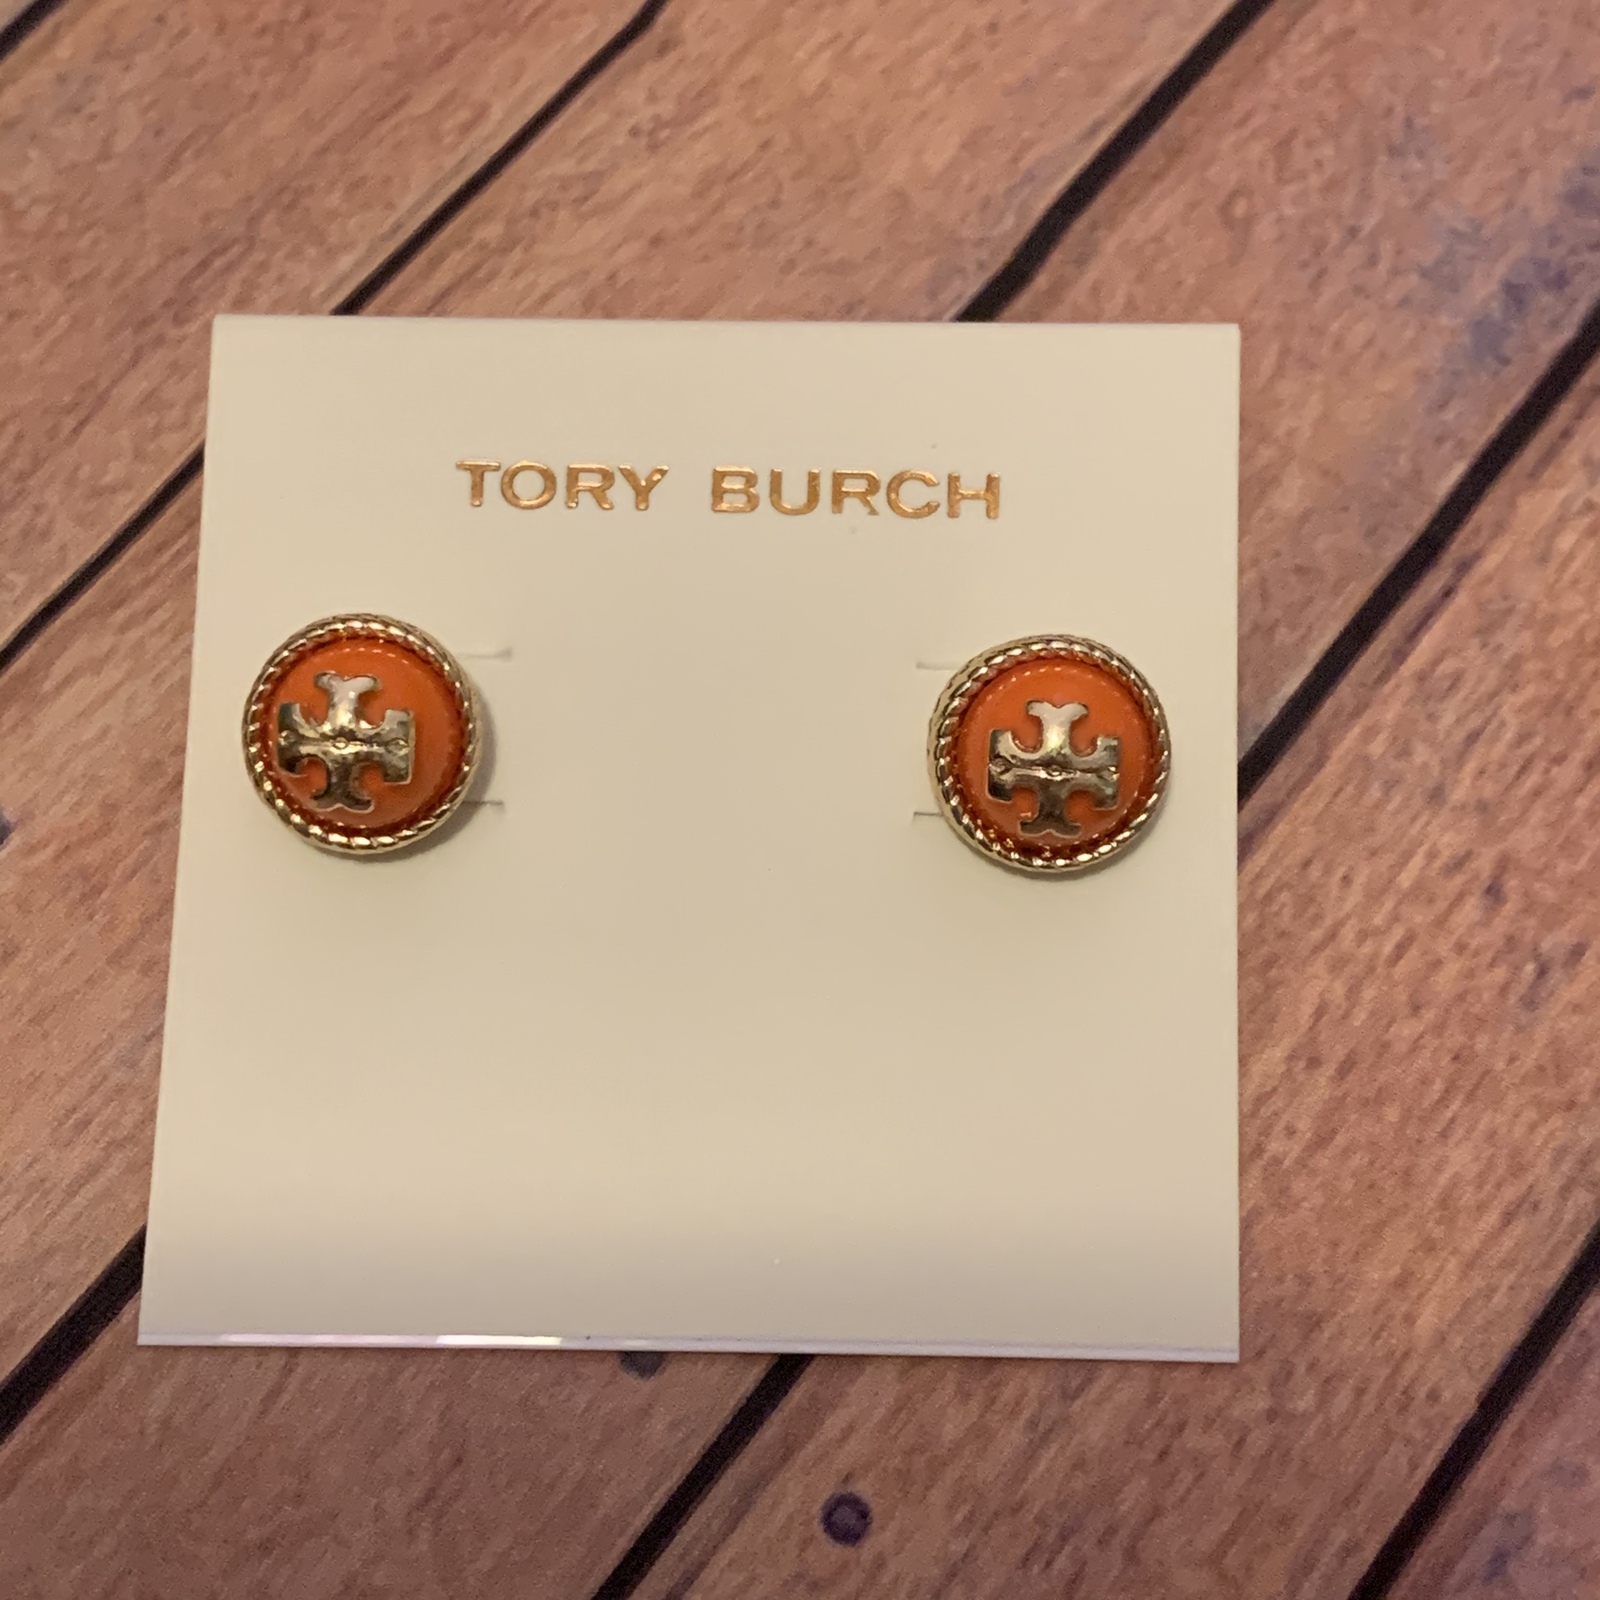 Tory Burch Rope Style Enamel Stud Earrings - $25.00